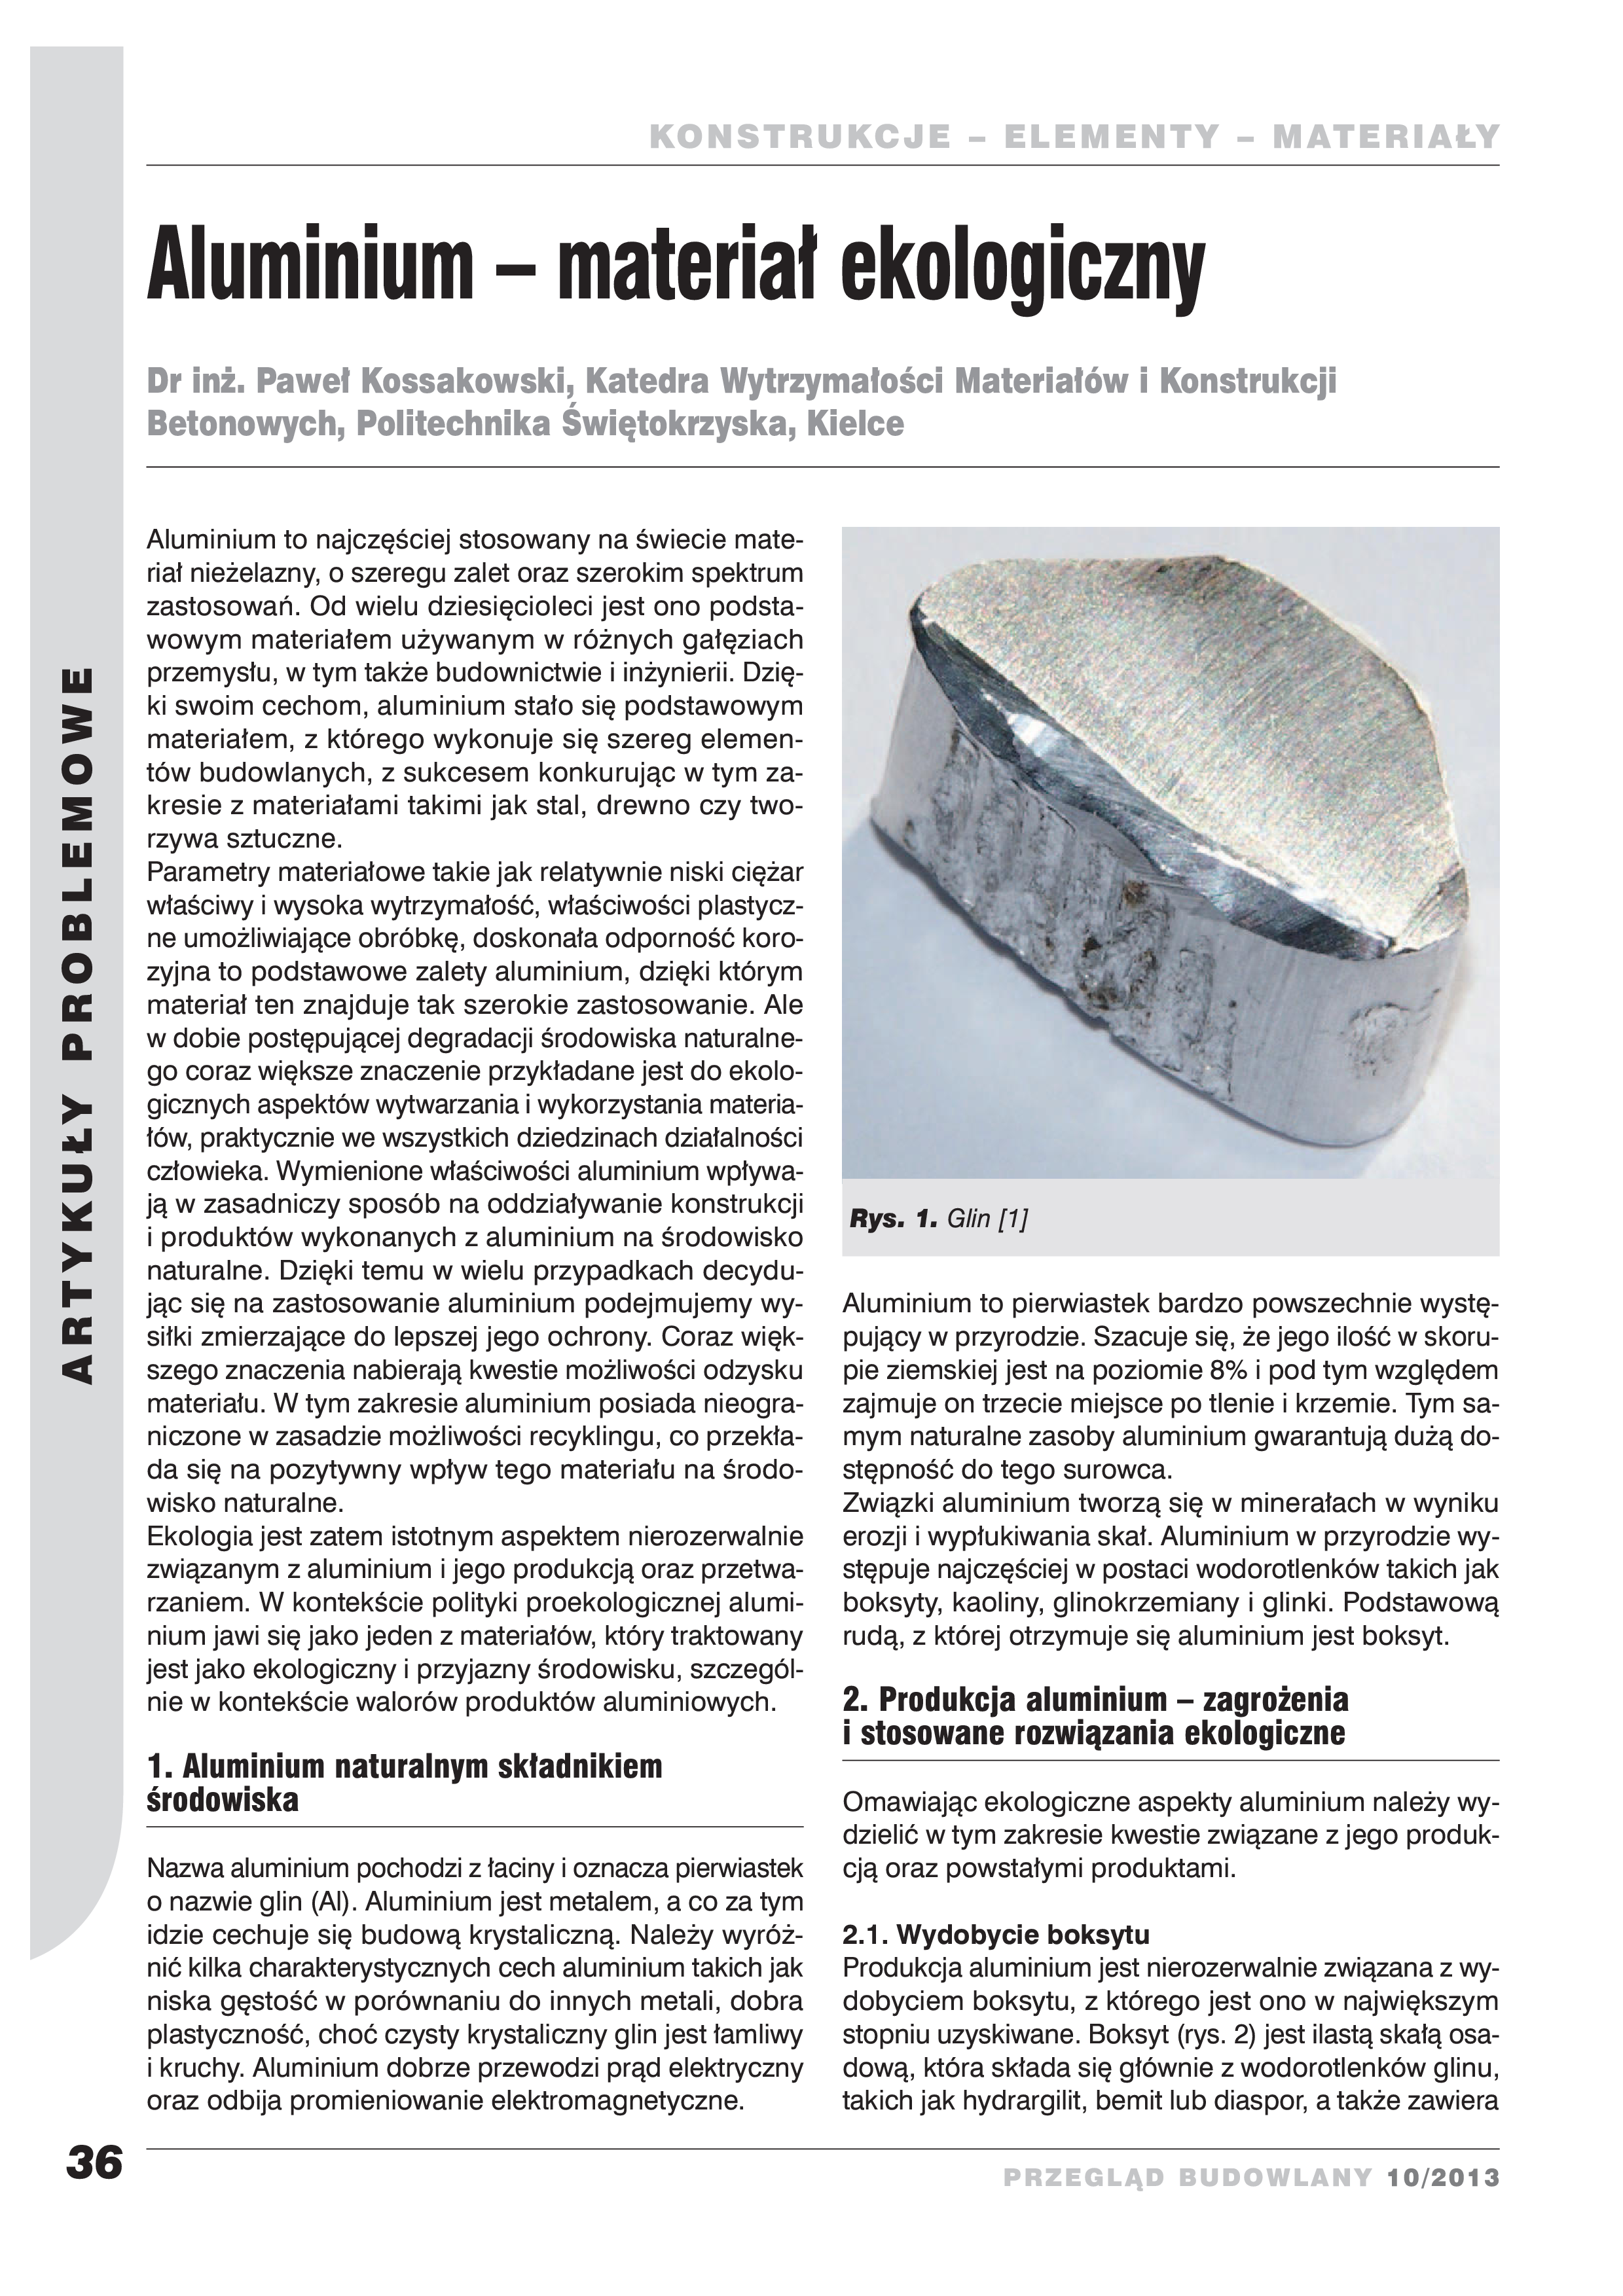 Aluminium materiał ekologiczny Kossakowski1.png